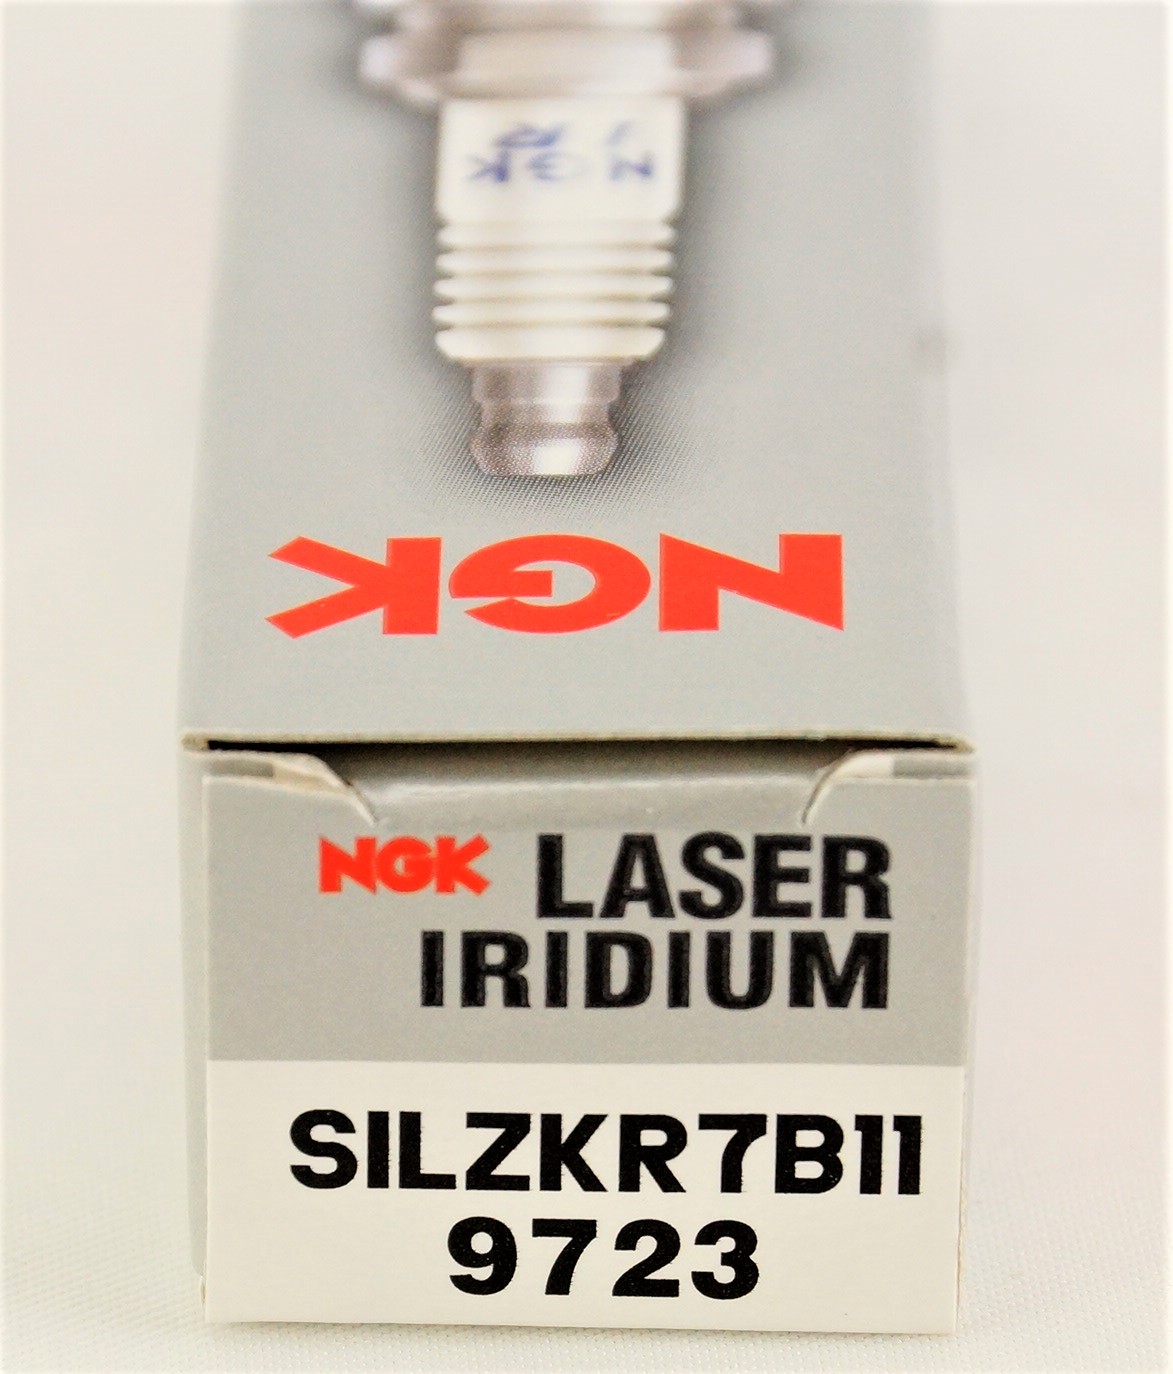 Set of 8 Genuine NGK 9723 Spark Plugs - Laser Iridium SILZKR7B11 Free Shipping - image 2